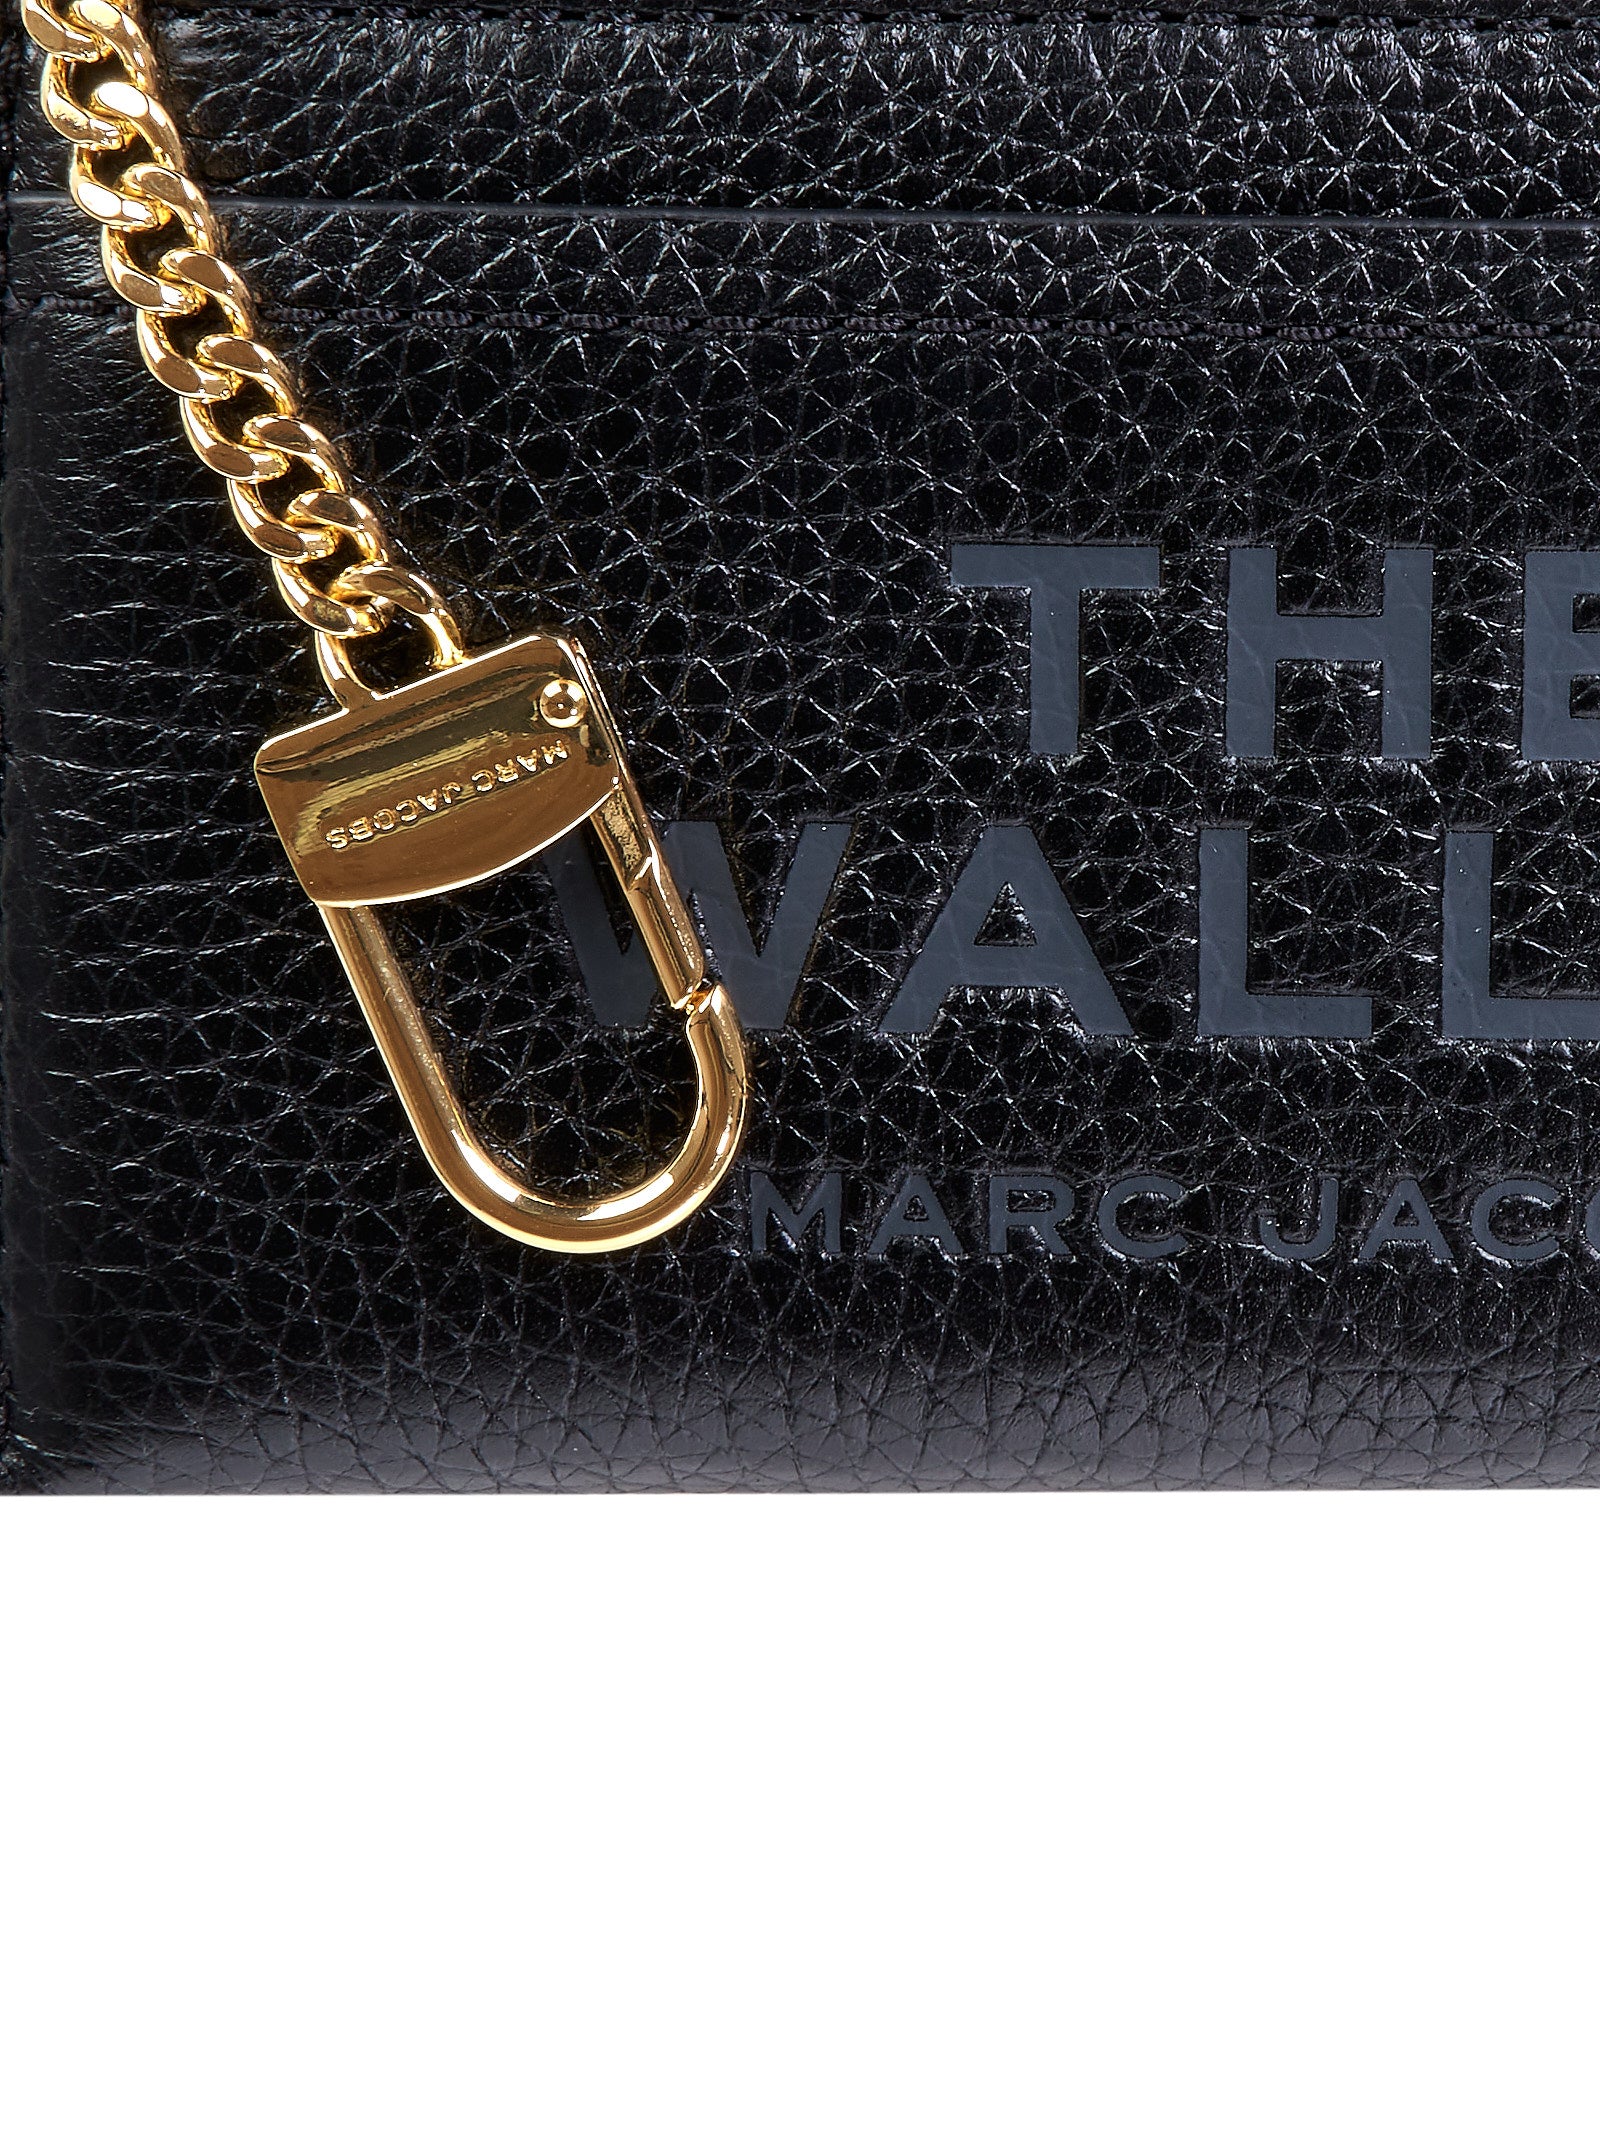 Portafogli MARC JACOBS Top zip multi wallet
Black